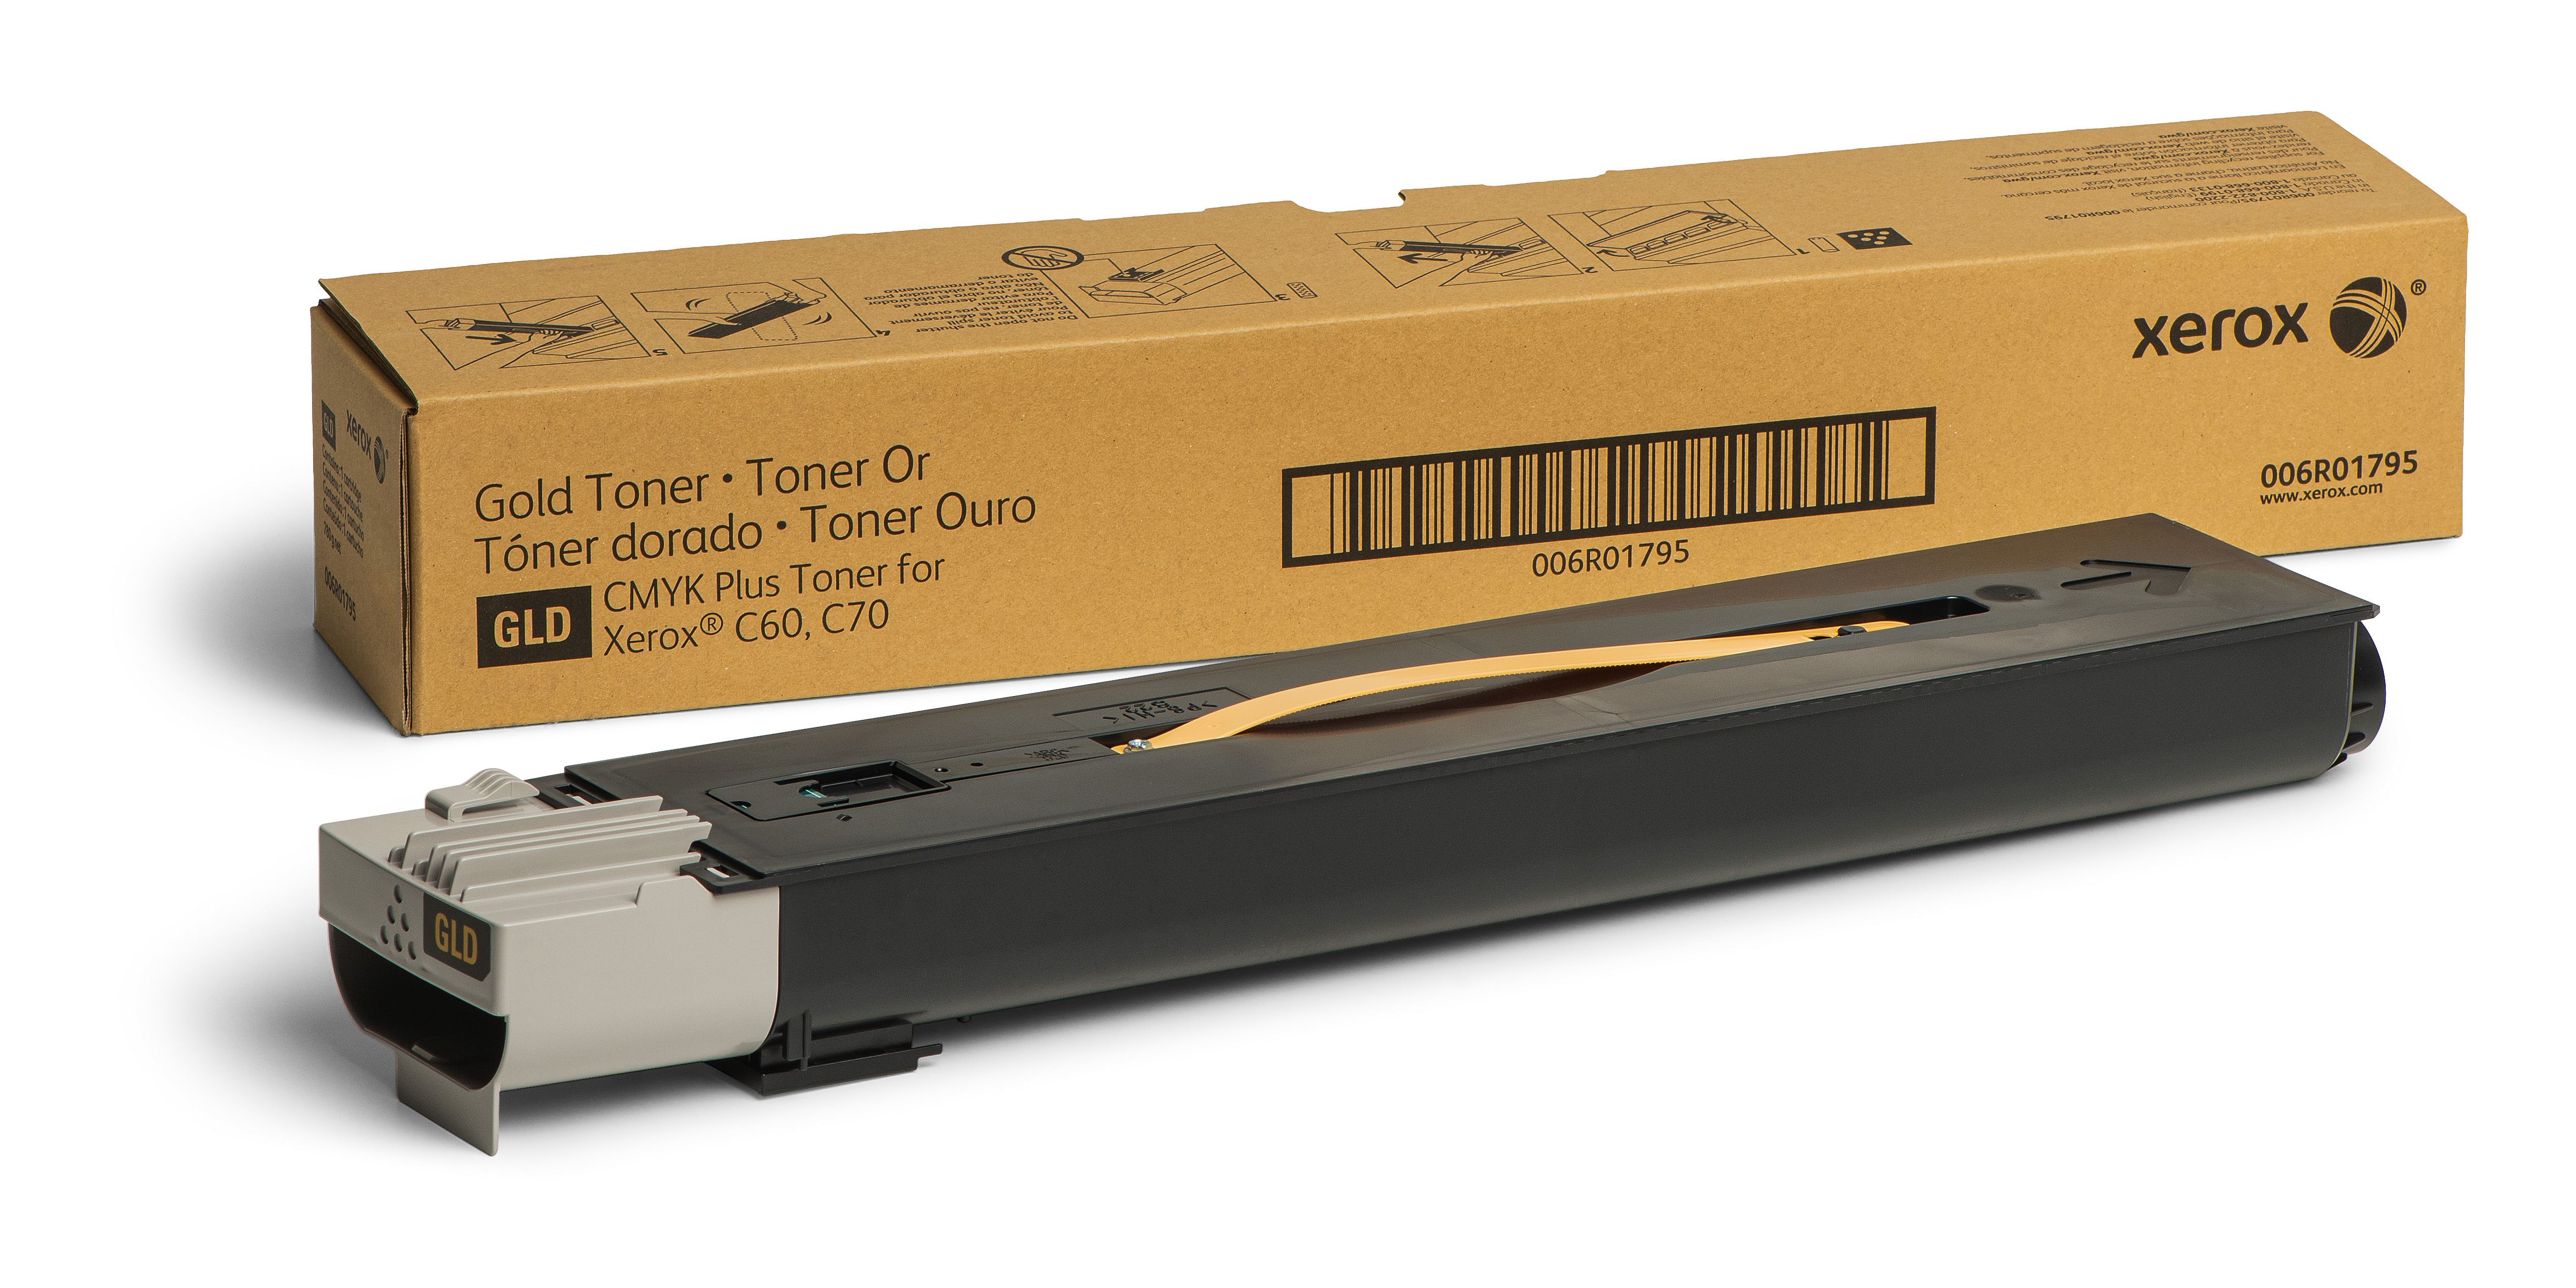 Xerox Gold Toner Cartridge For The Xerox Color C60/C70 006R01795 Genuine  Xerox Supplies